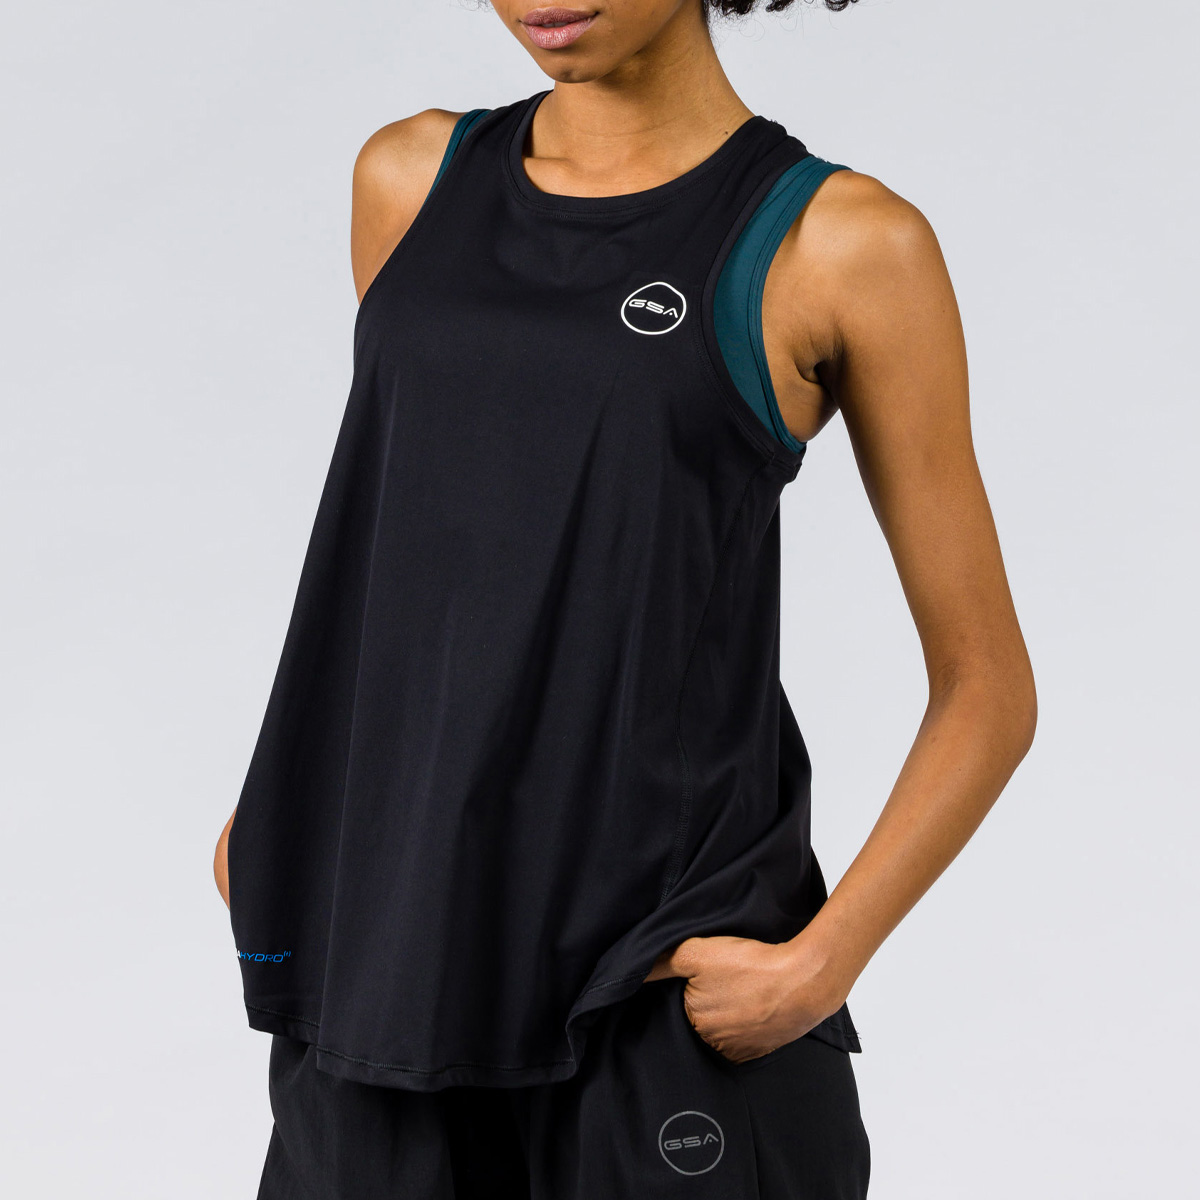 GSA Γυναικεία Αμάνικη Μπλούζα με Ανοιχτή Πλάτη Μαύρο 248582